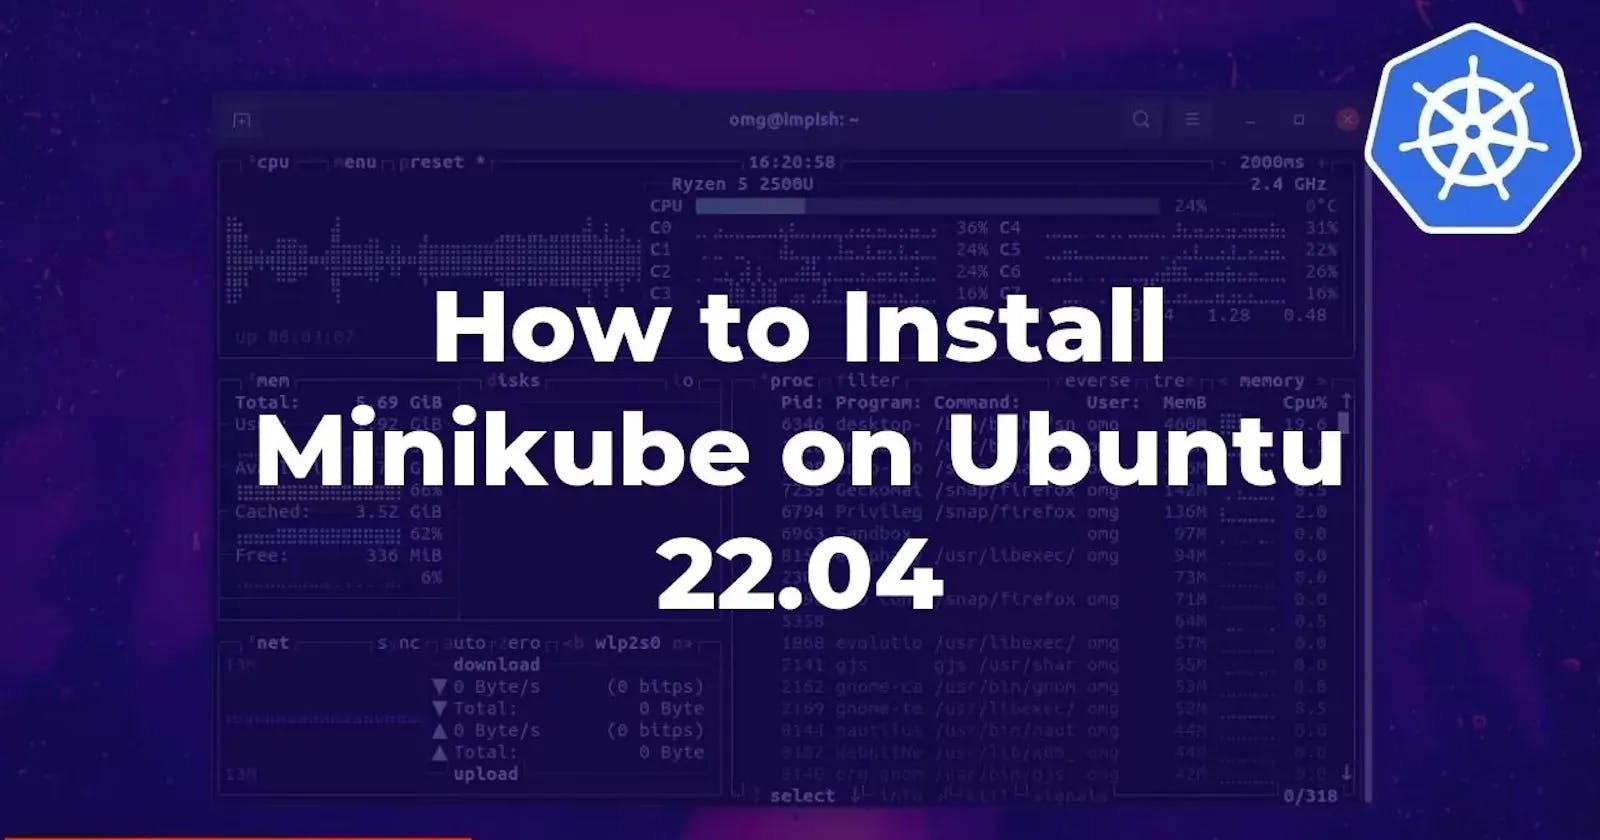 Minikube Installation Guide for Ubuntu